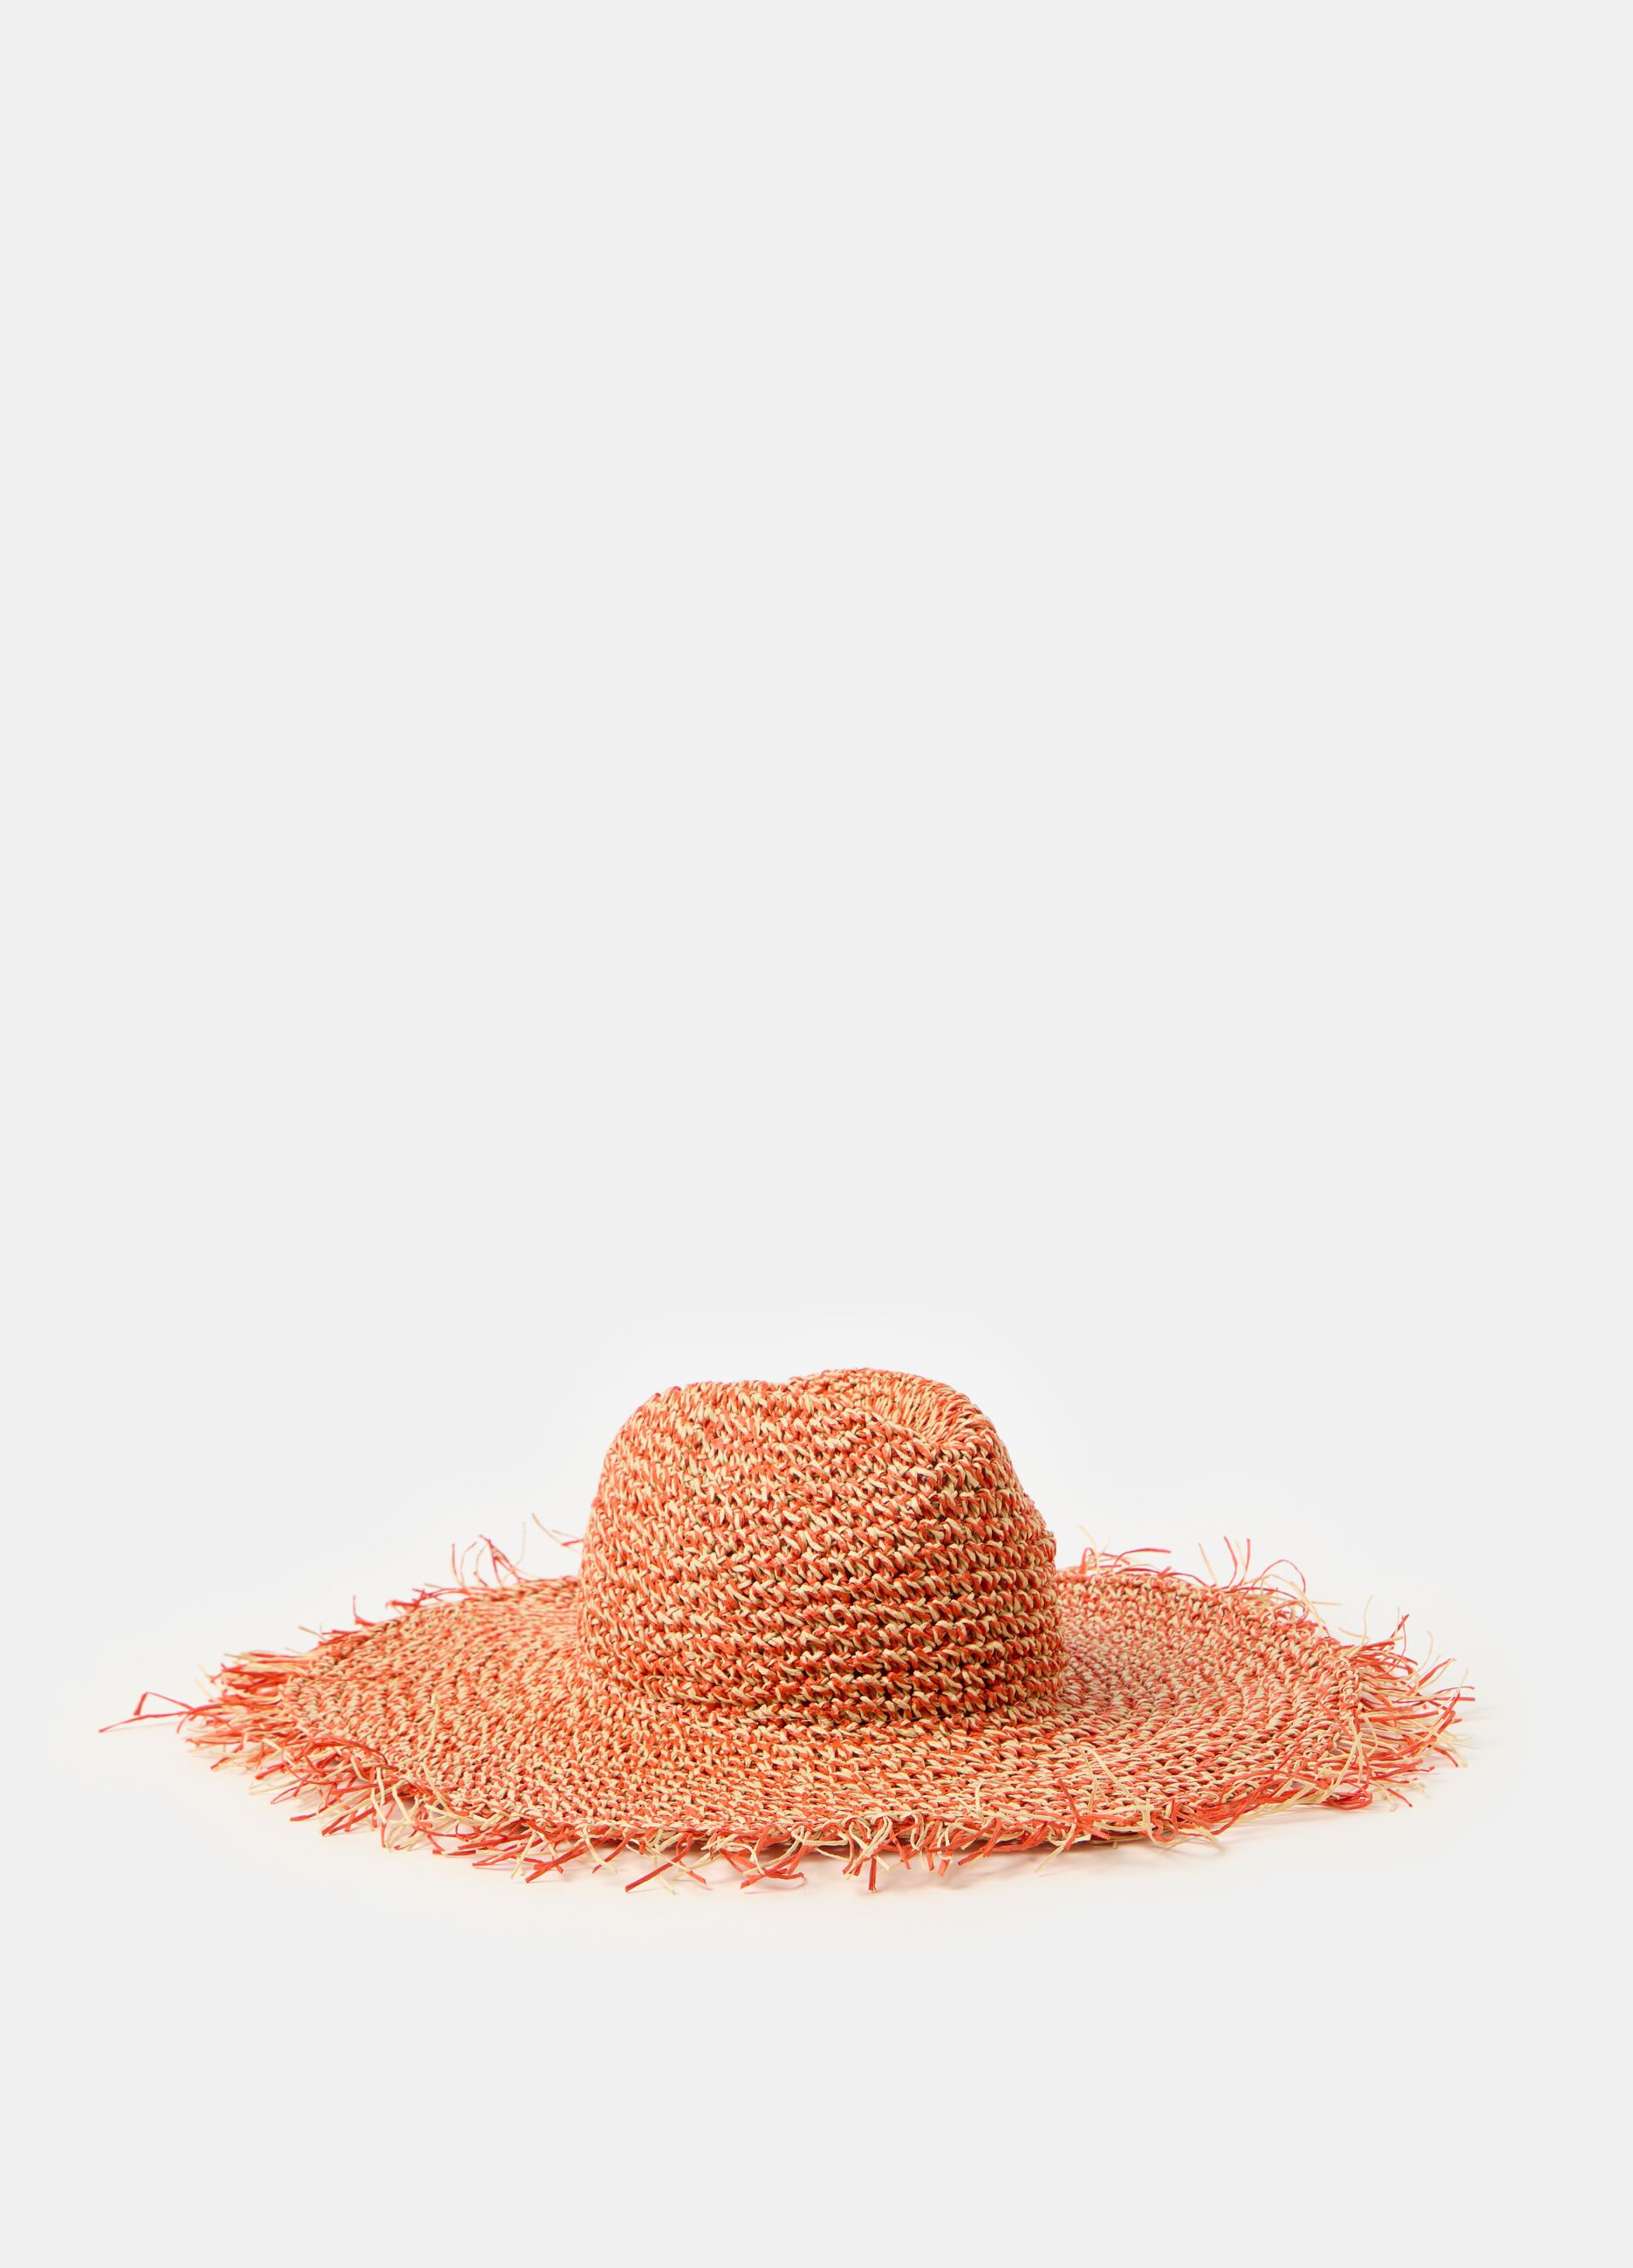 Sombrero de paja con flecos